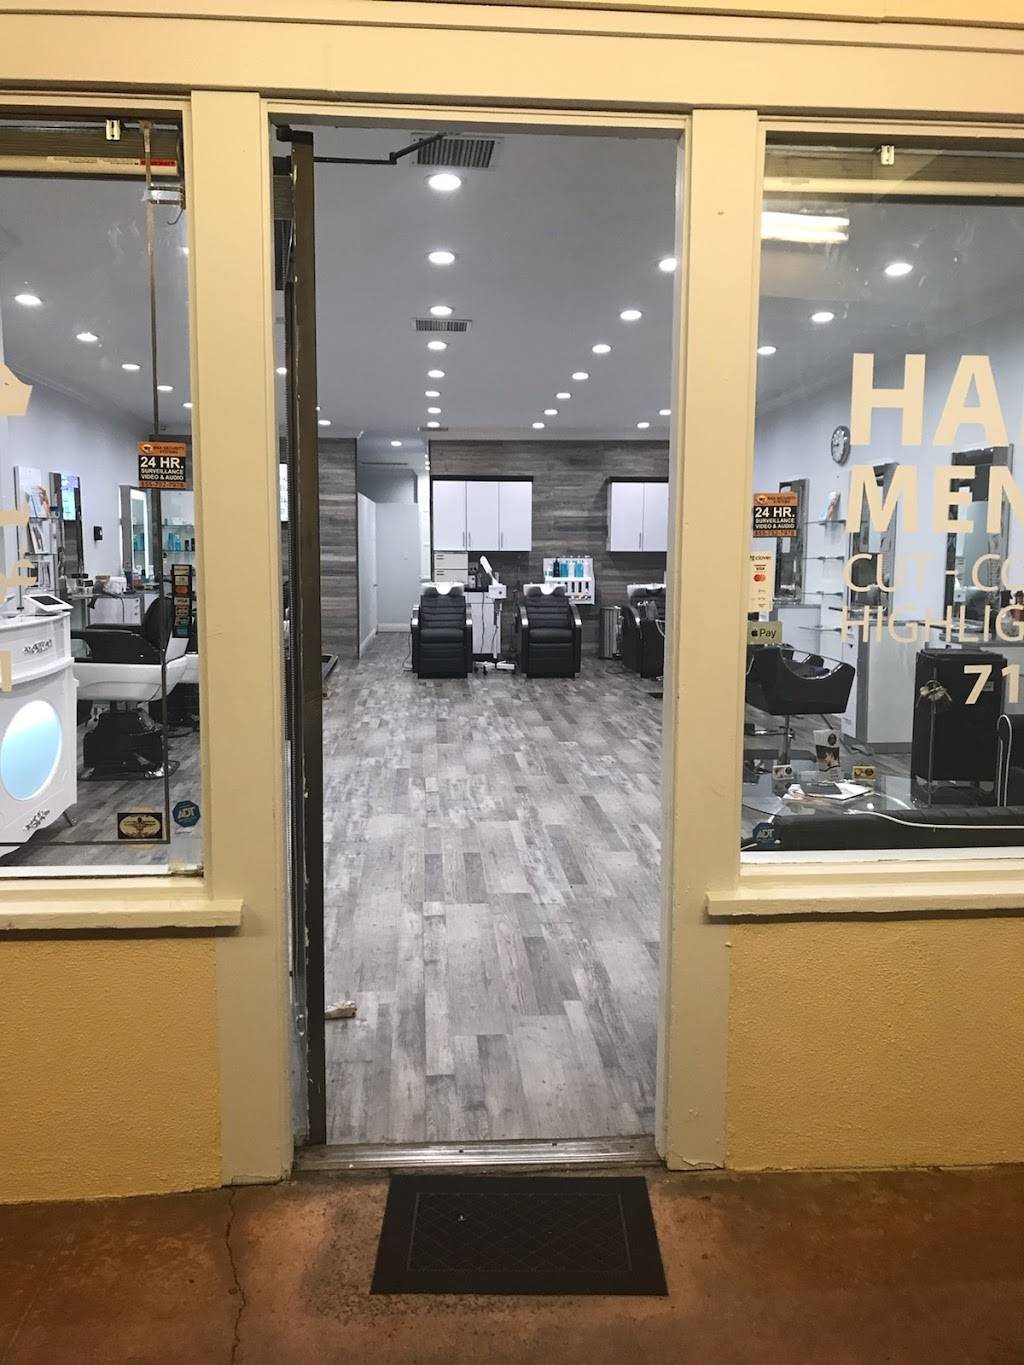 Aziz Cuts Salon & Barbershop | 1214 S Brookhurst St, Anaheim, CA 92804 | Phone: (714) 991-6501